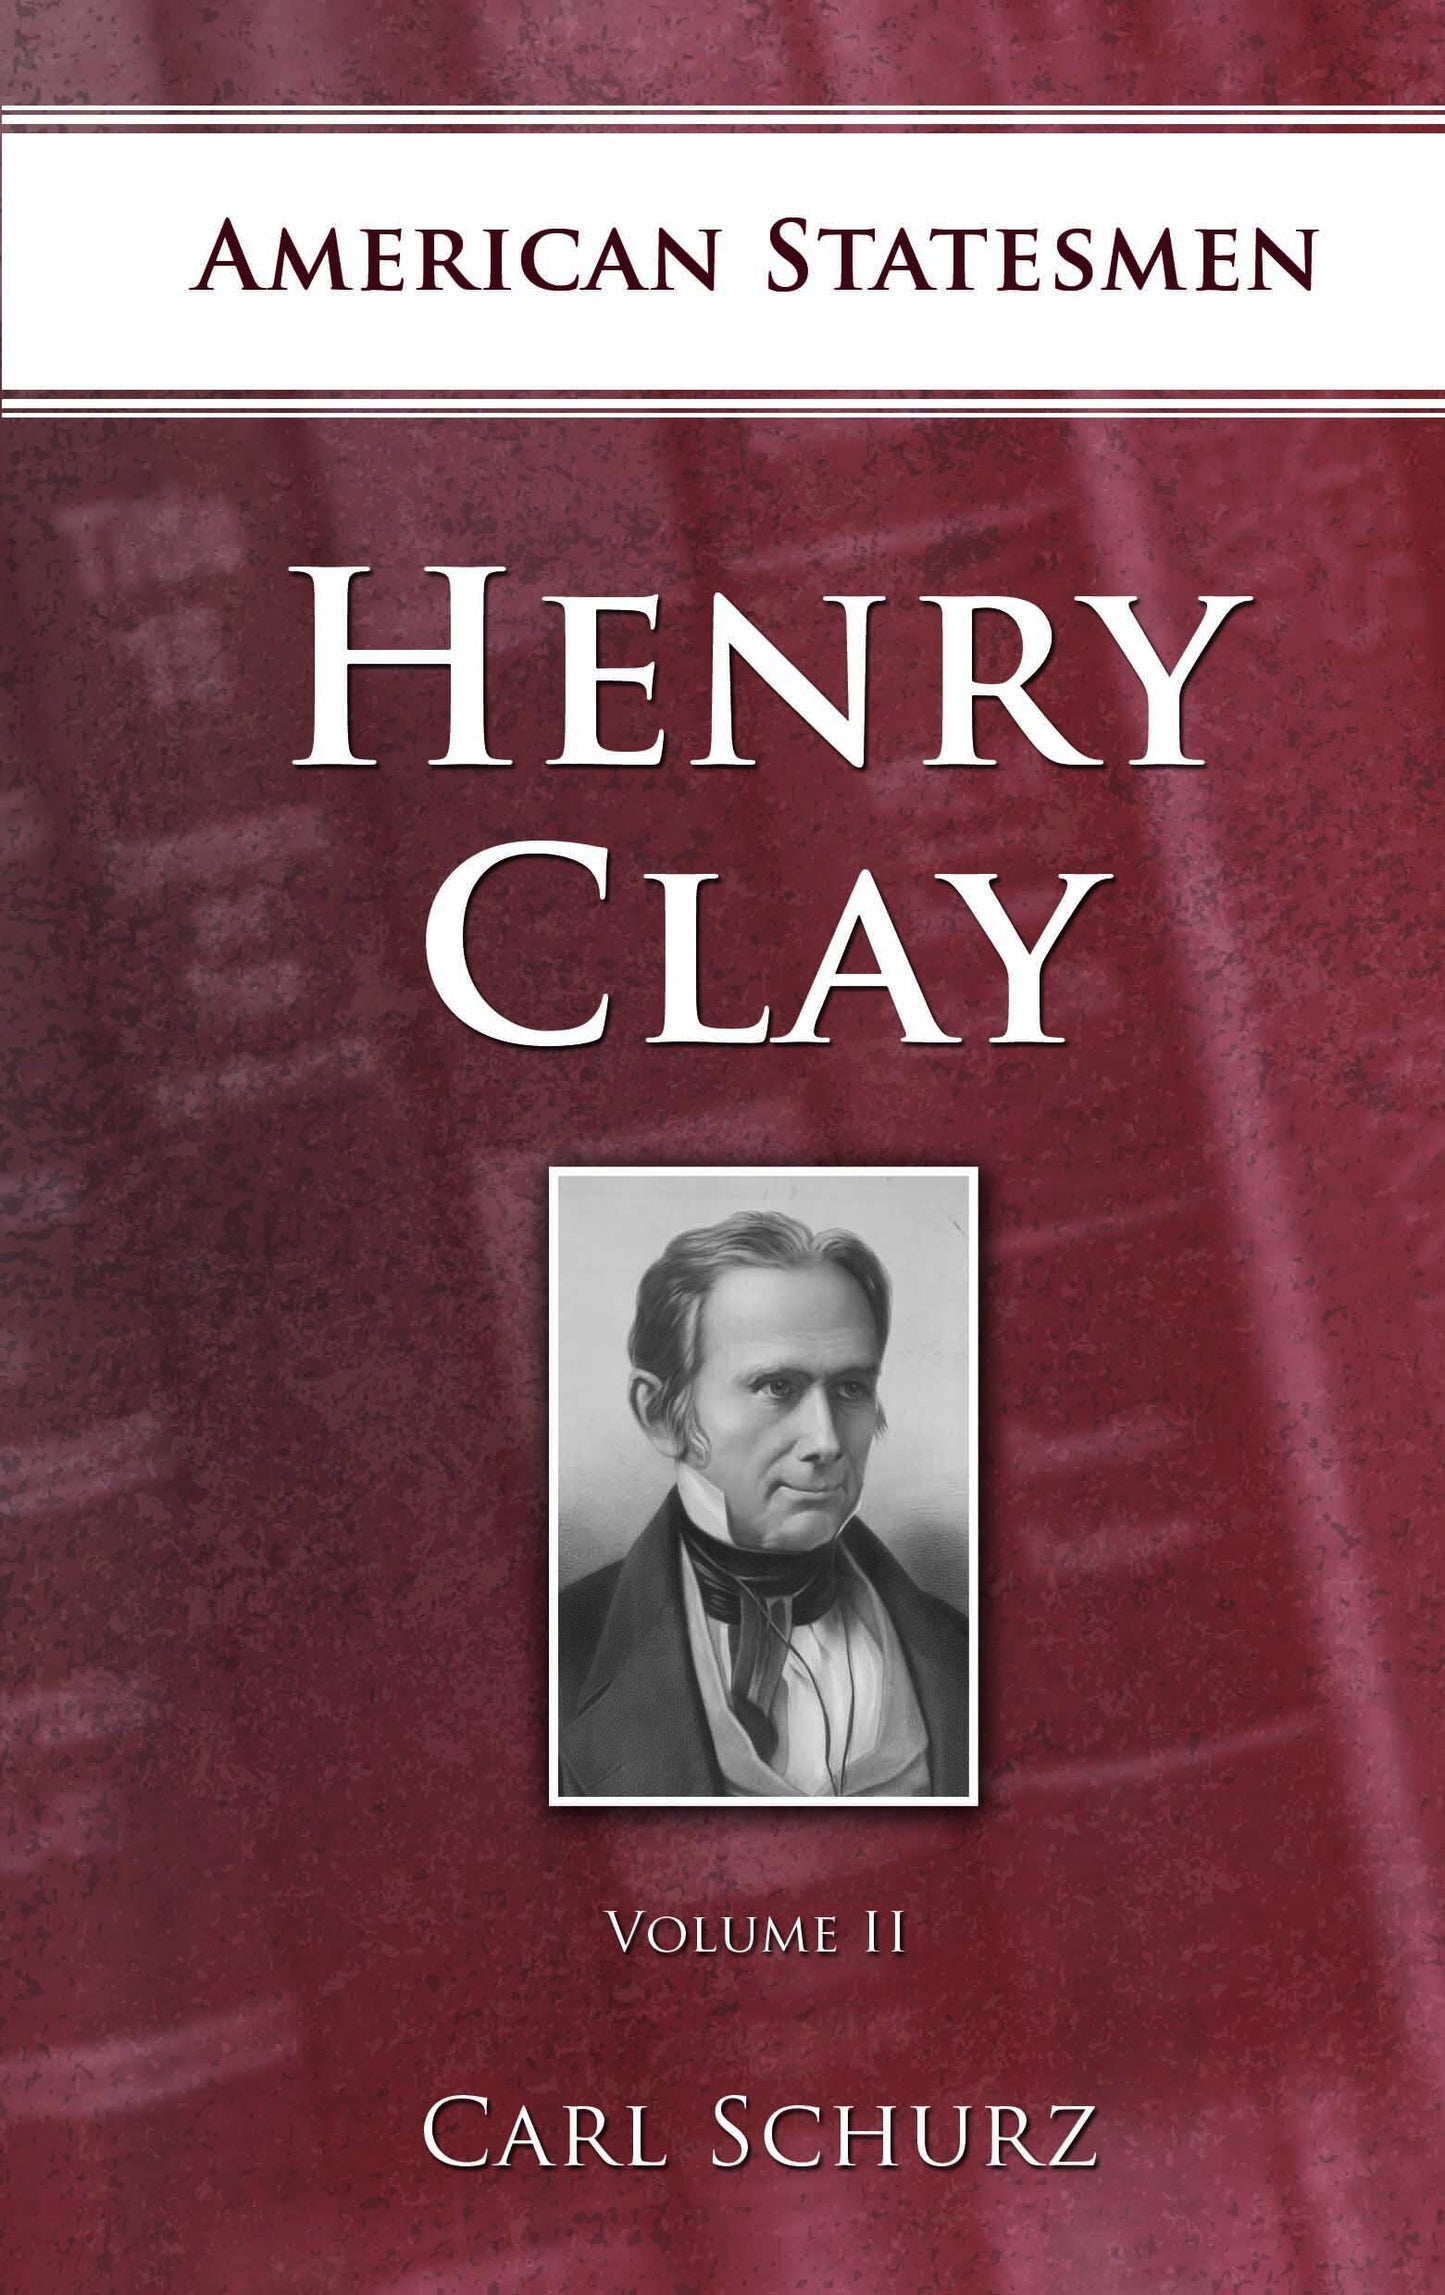 Henry Clay Volume II